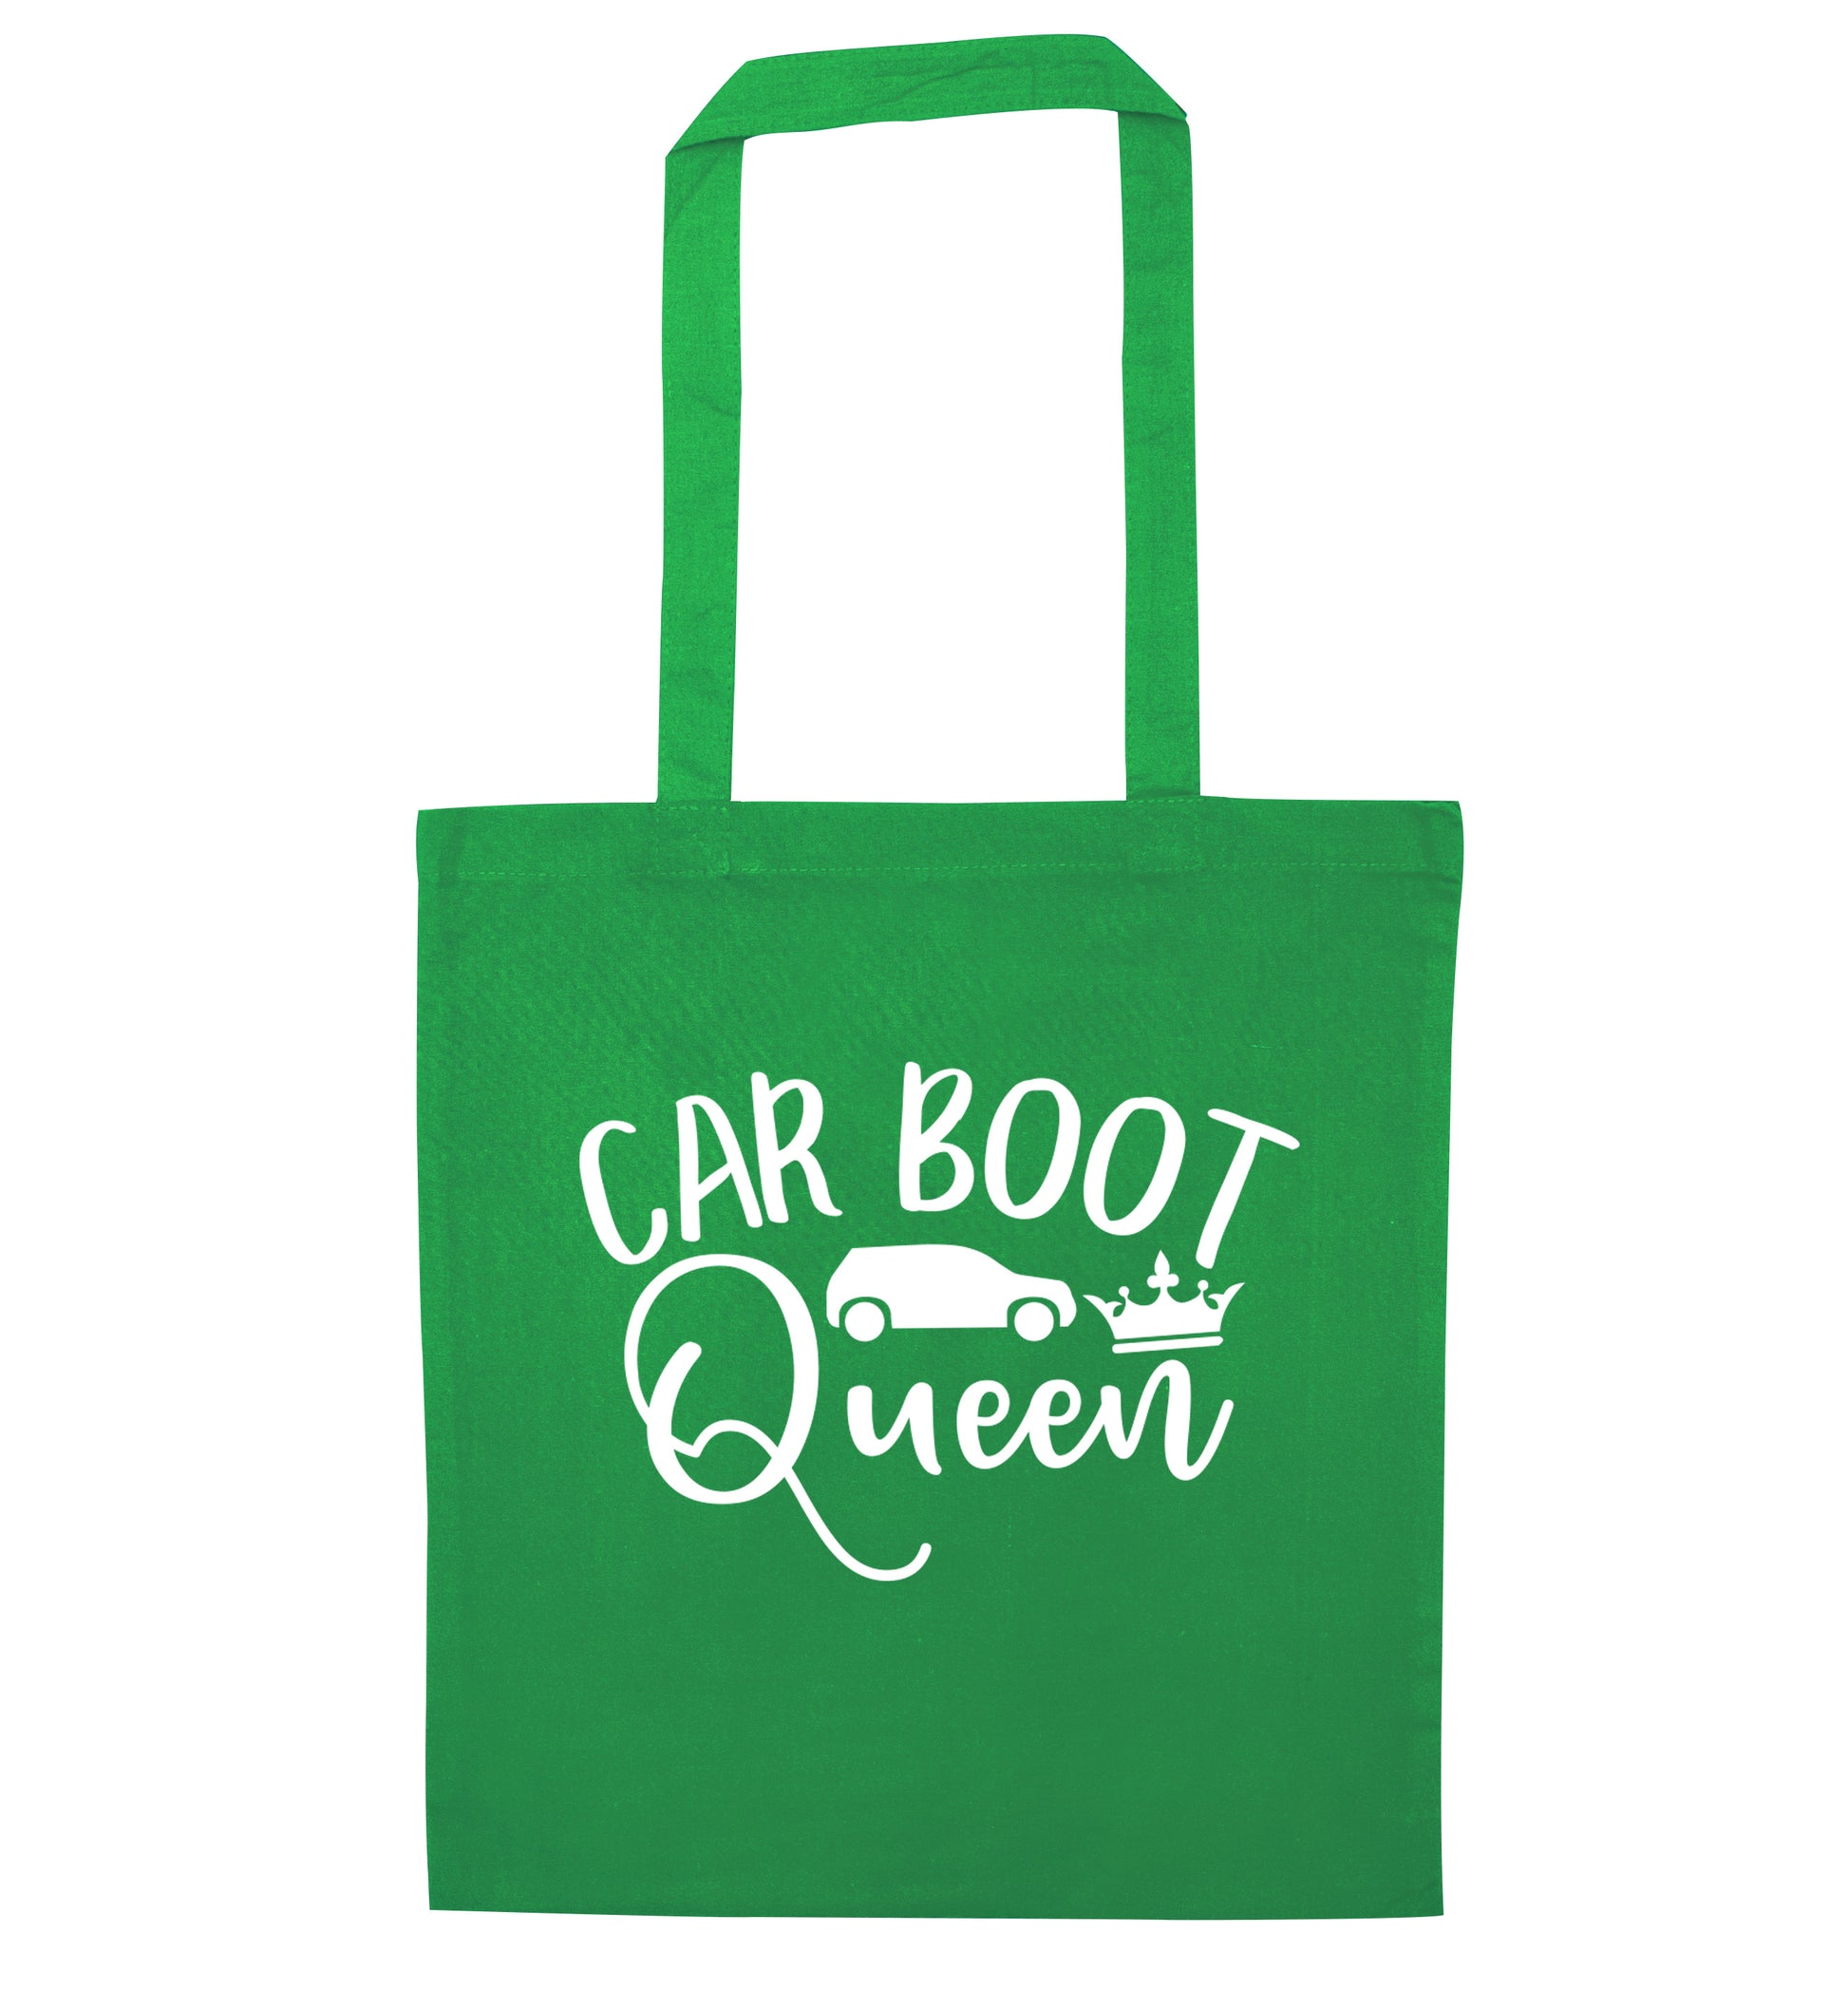 Carboot Queen green tote bag